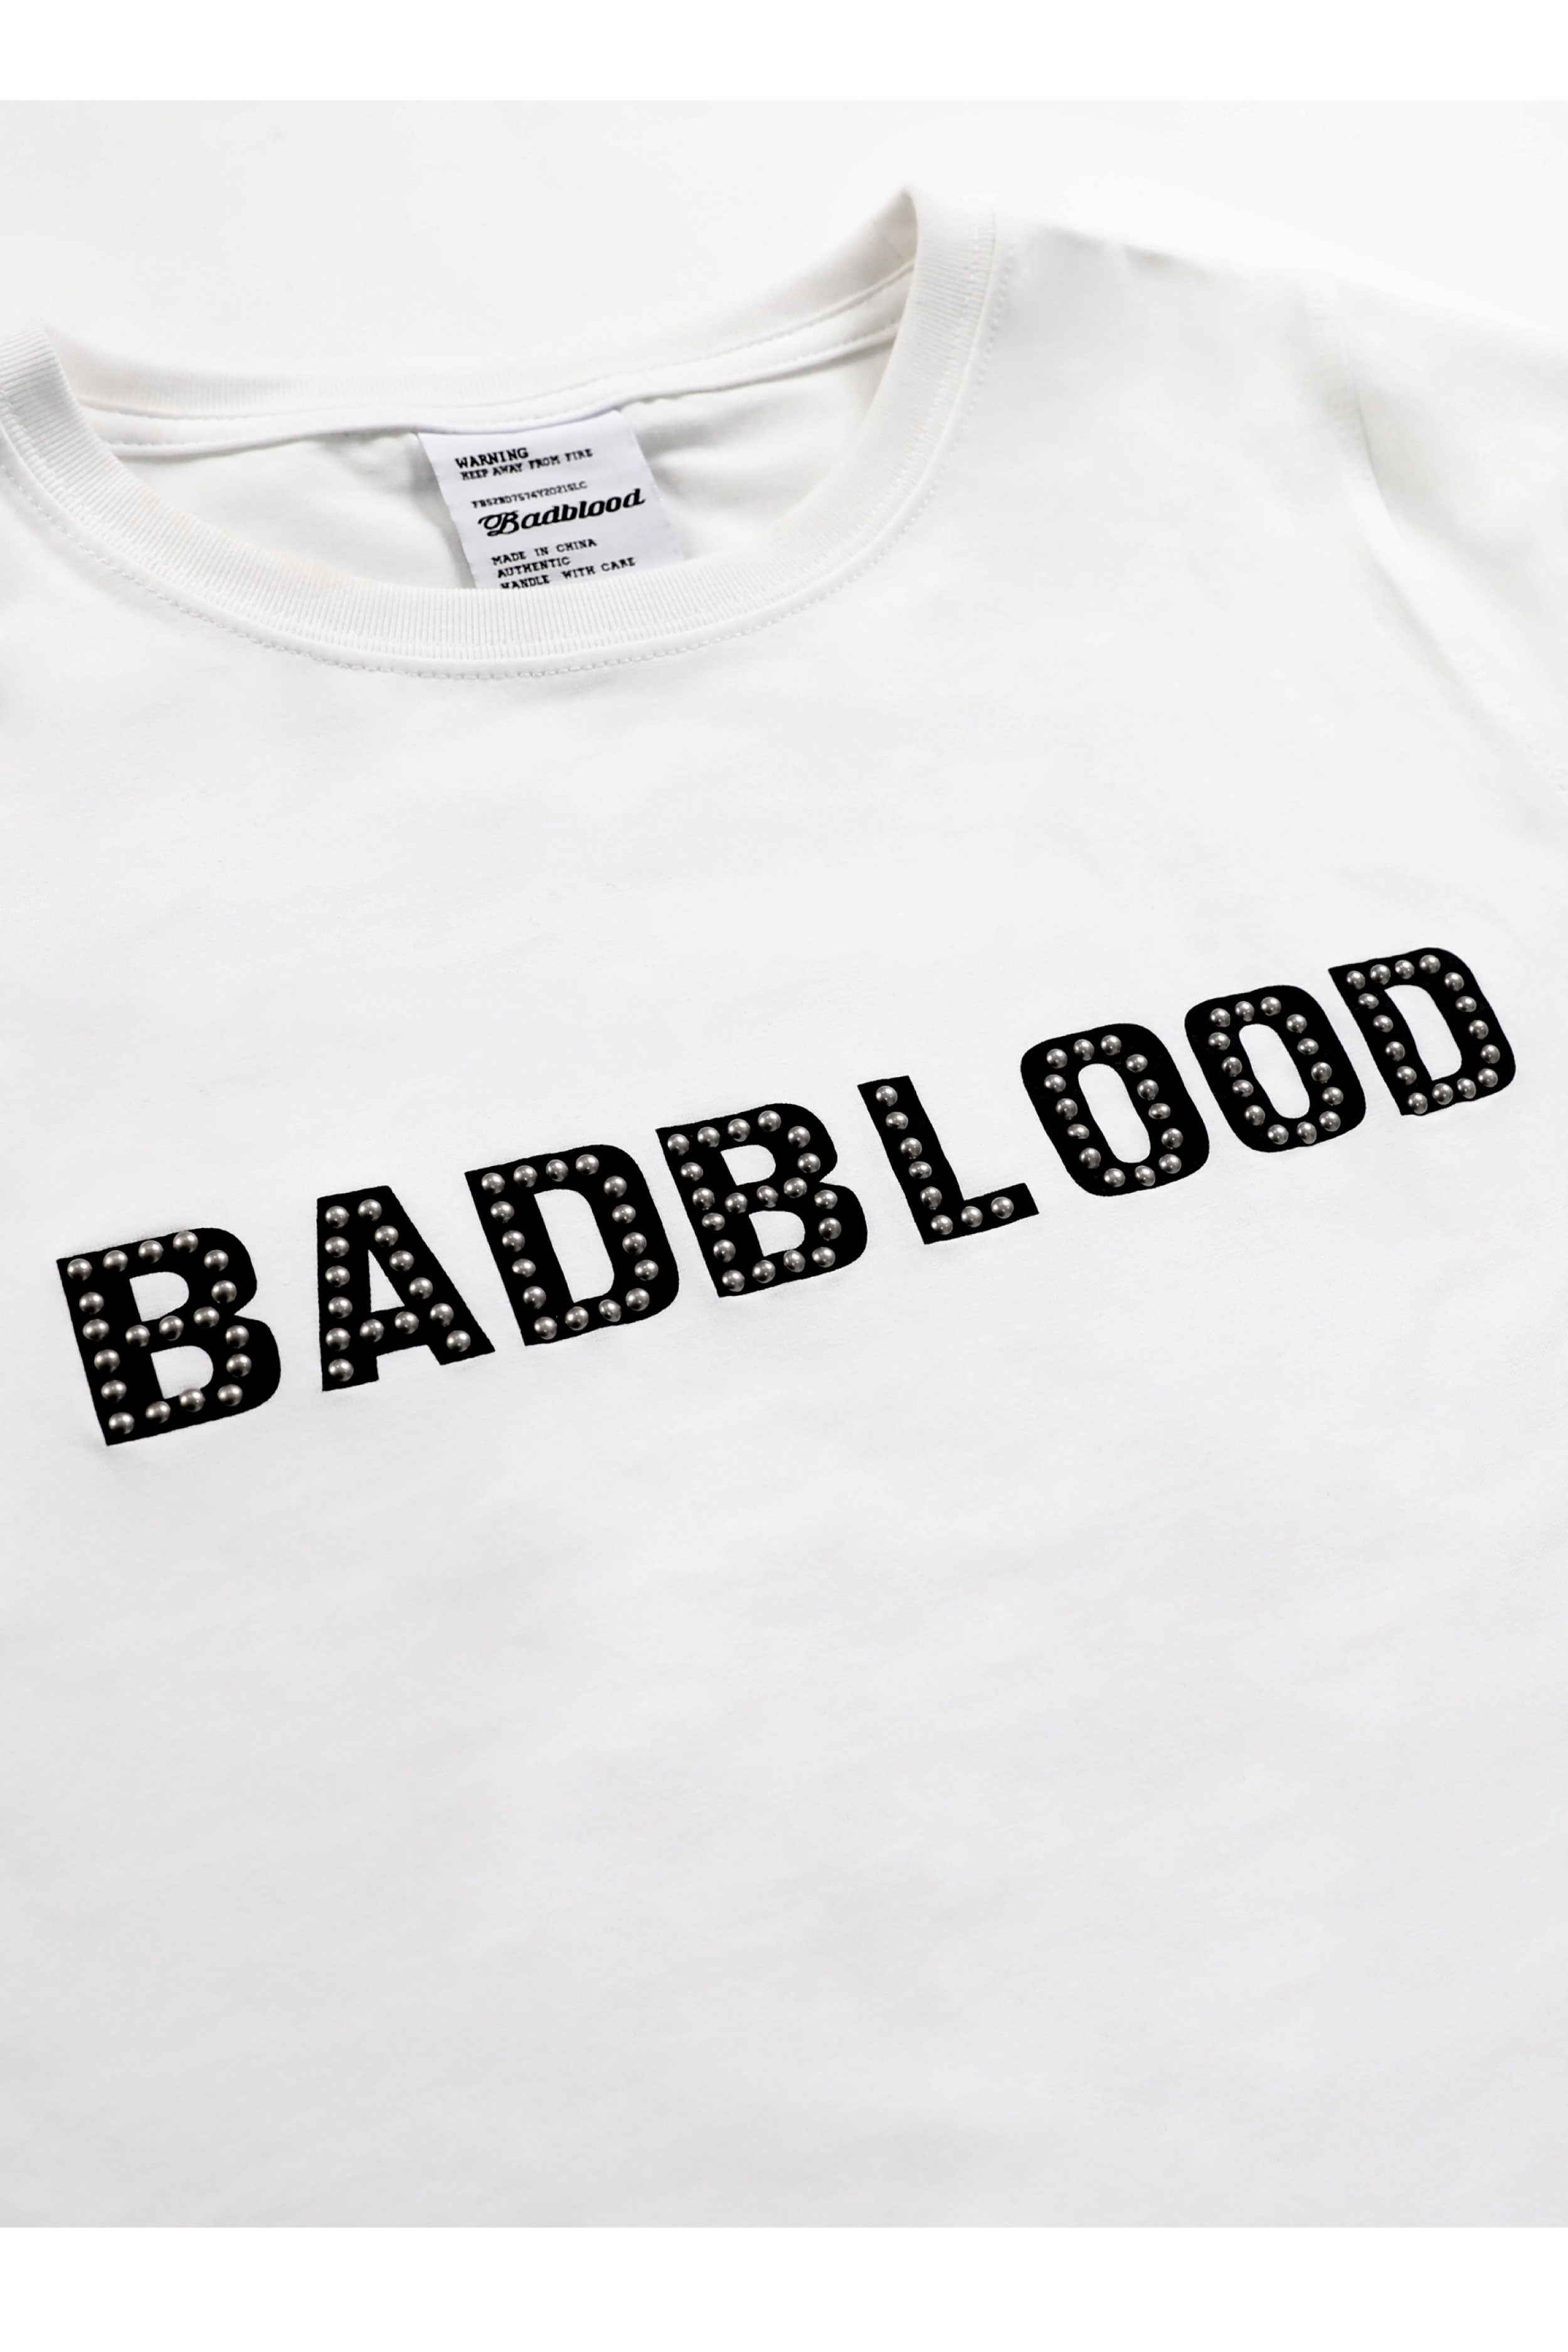 Badblood Studded Logo Short Sleeve Slim Fit White